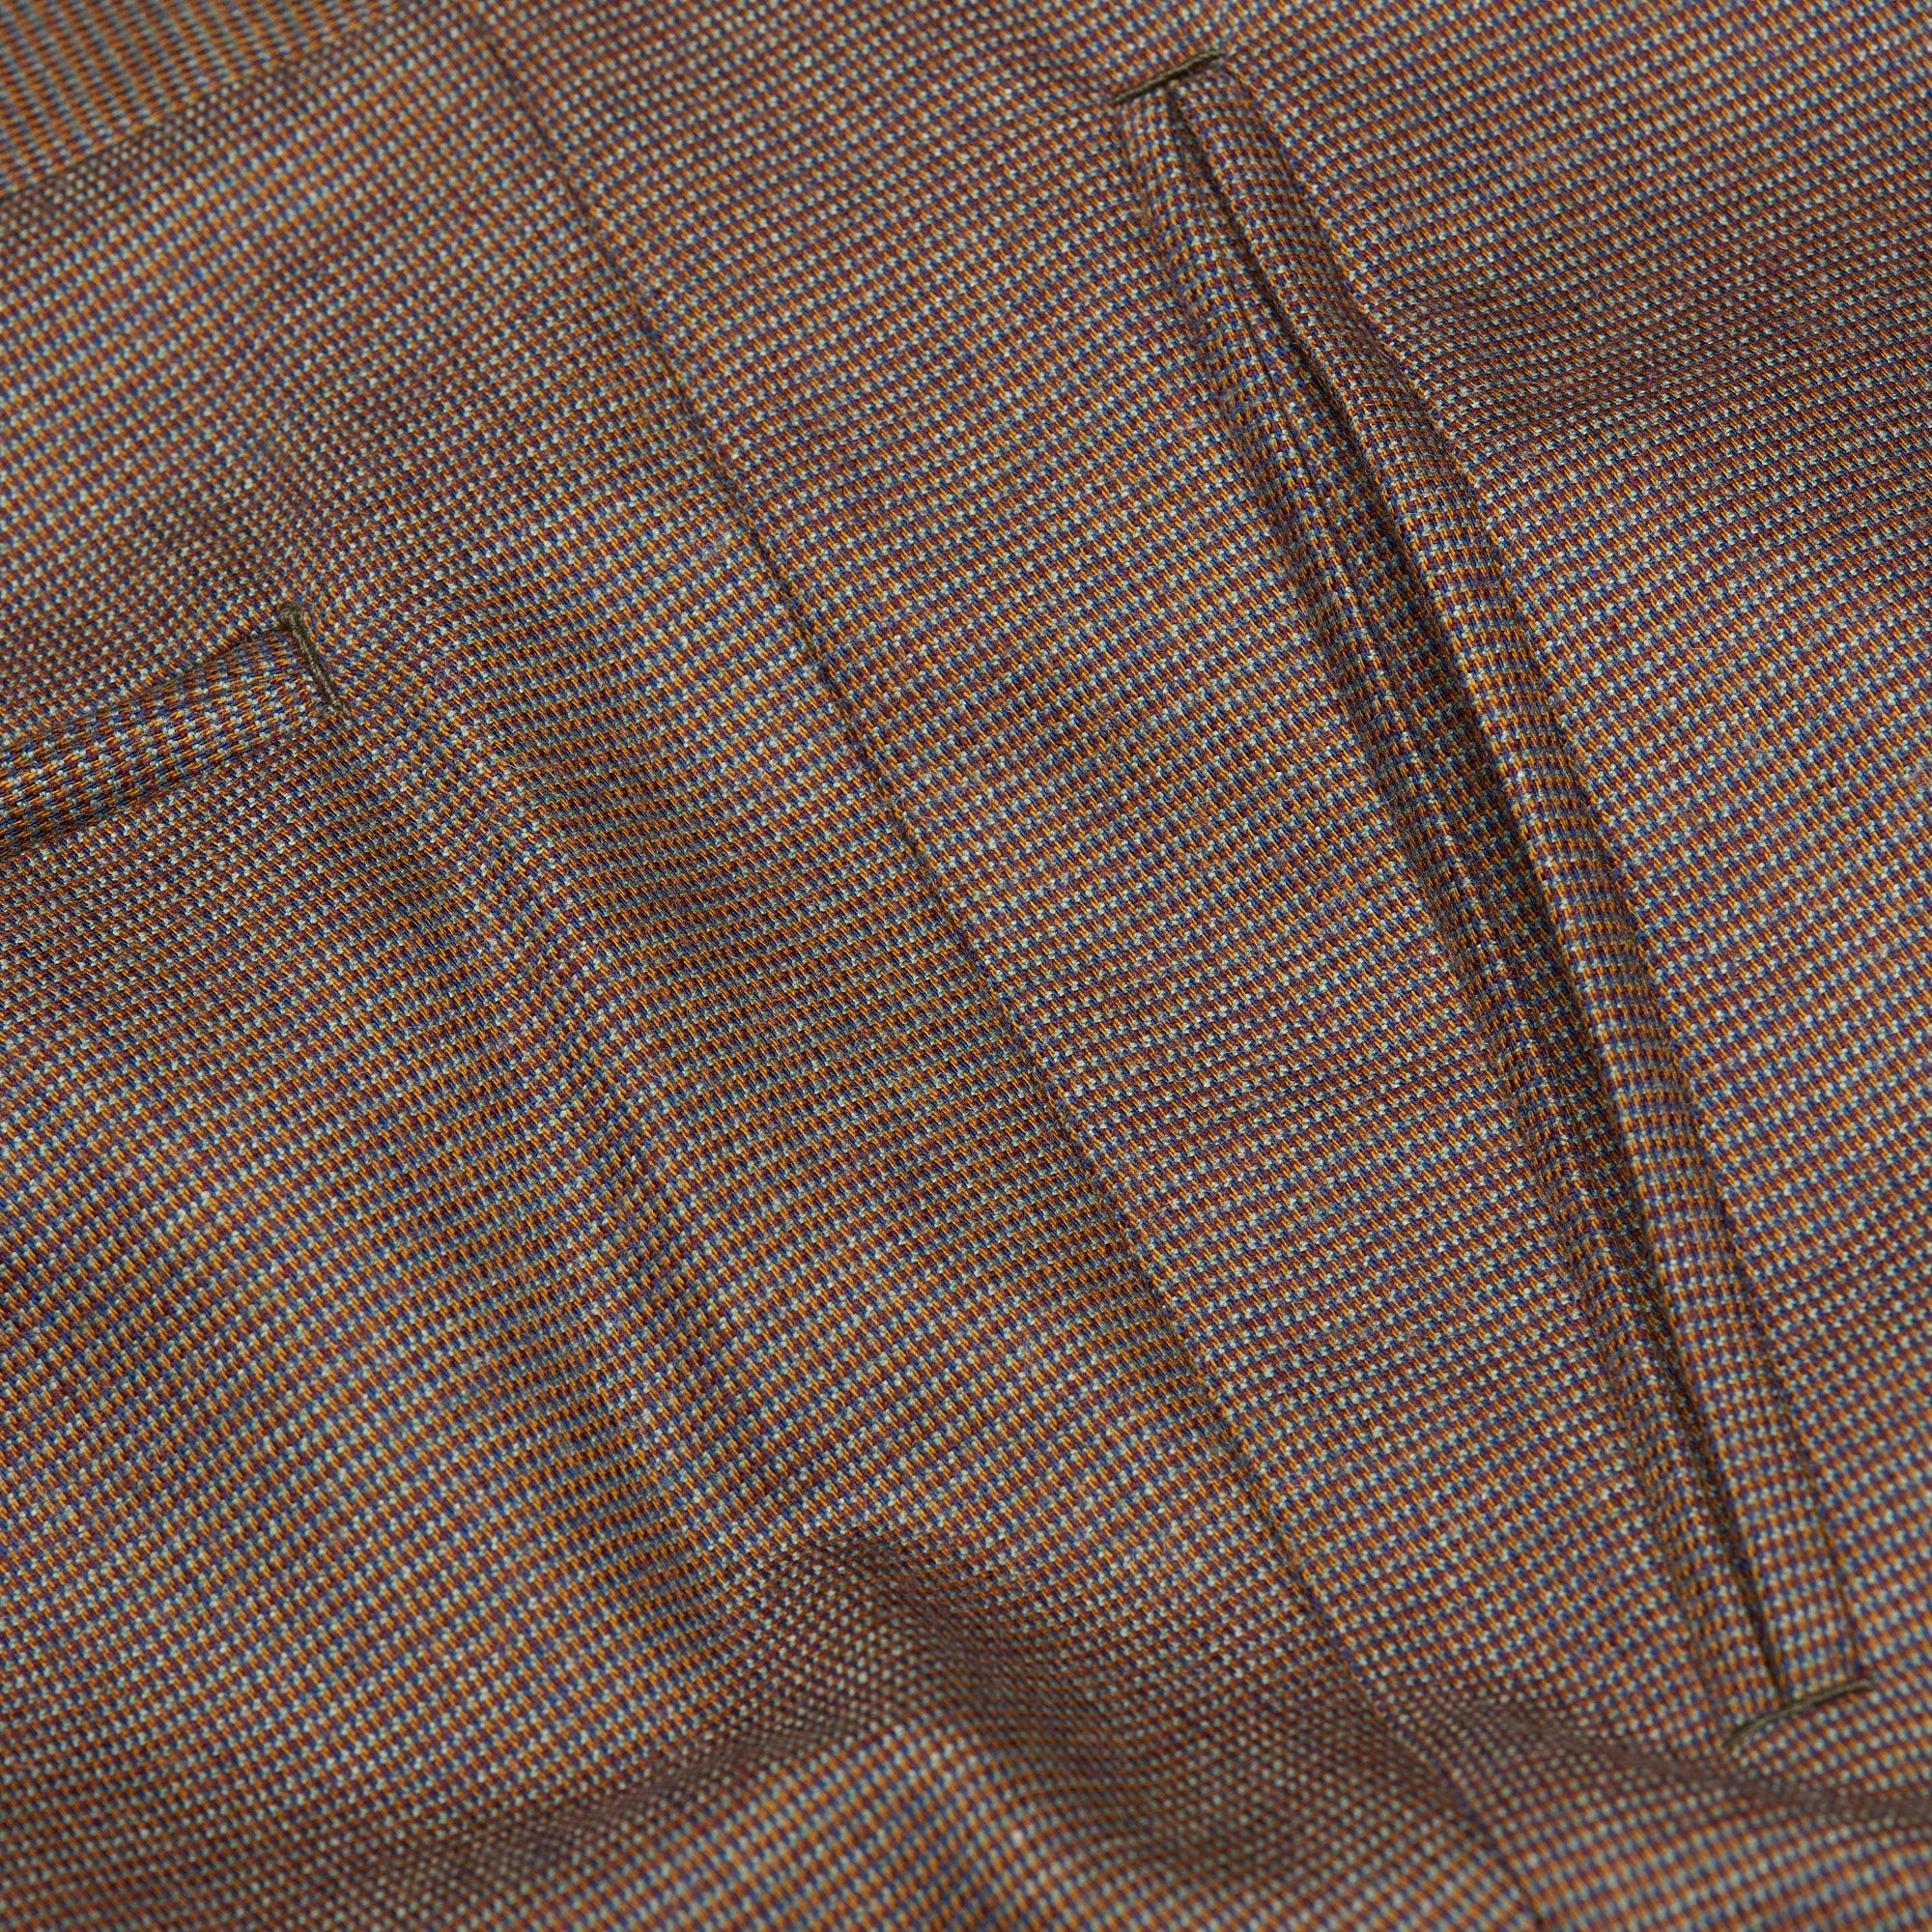 BESPOKE ATHENS Handmade Brown Wool Flat Front Dress Pants EU 56 NEW US 40 BESPOKE ATHENS